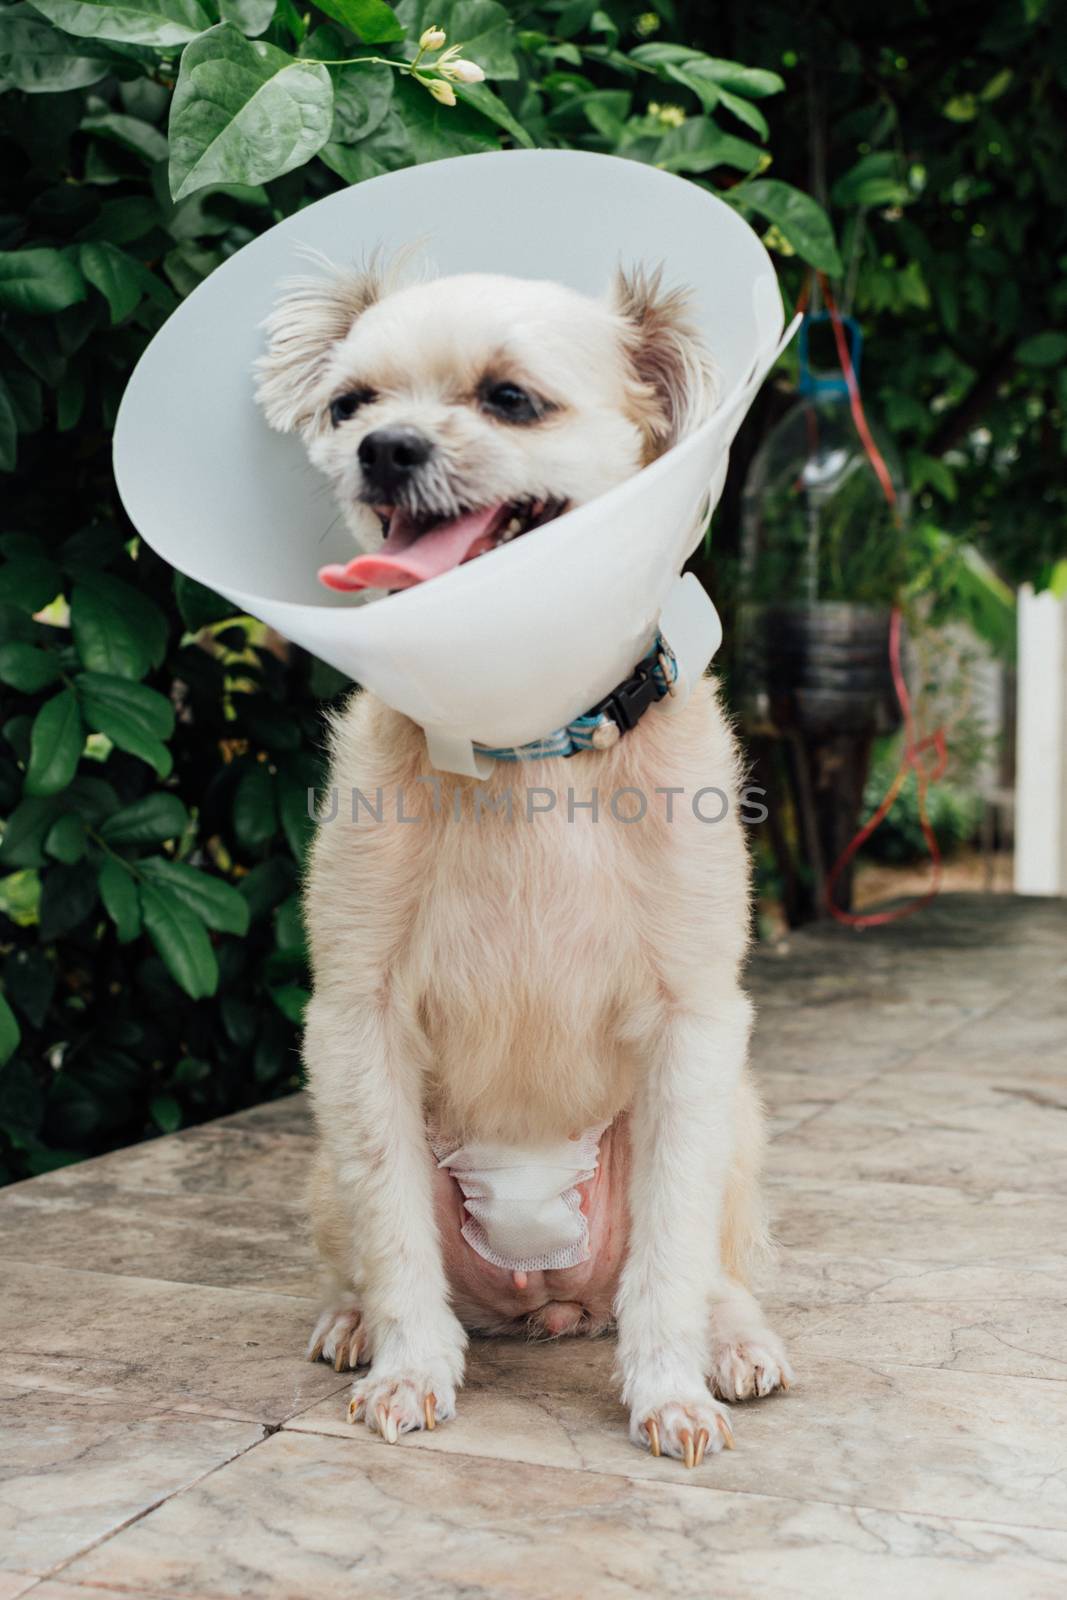 Dog abdomen surgery bandage in veterinary clinic by PongMoji